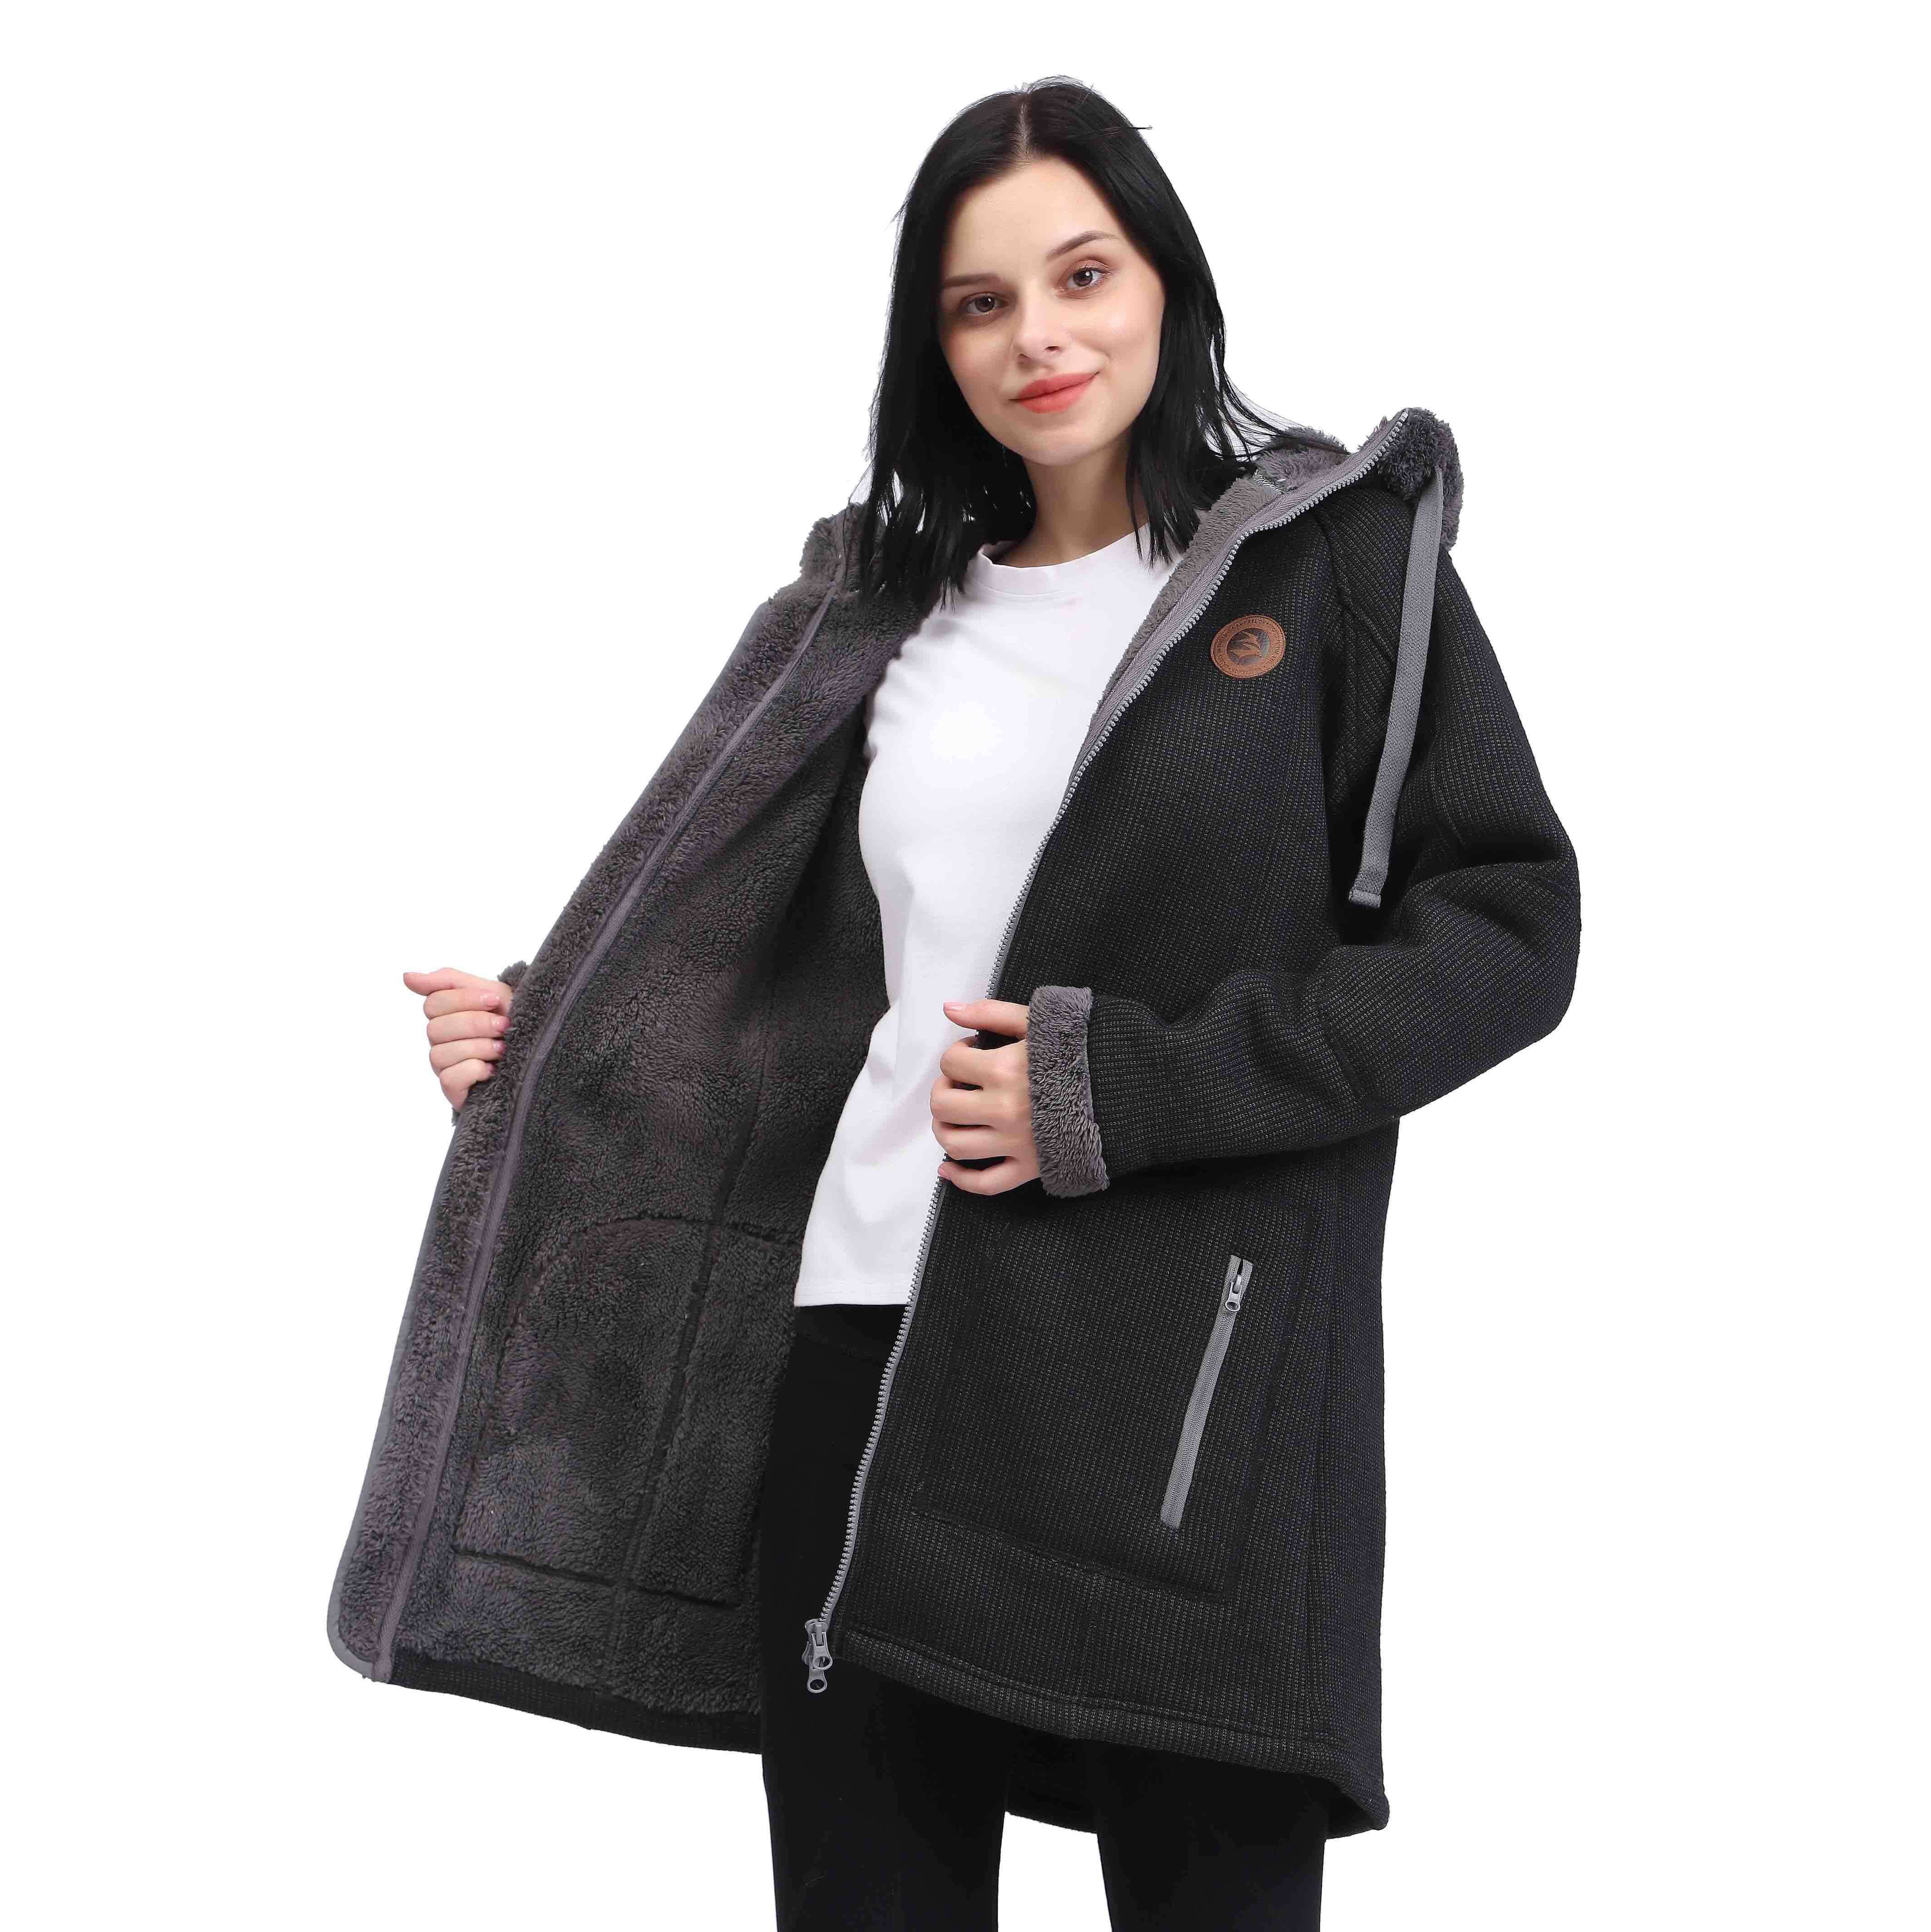 Chaqueta de abrigo parka de invierno consolidada de vellón Sherpa para mujer